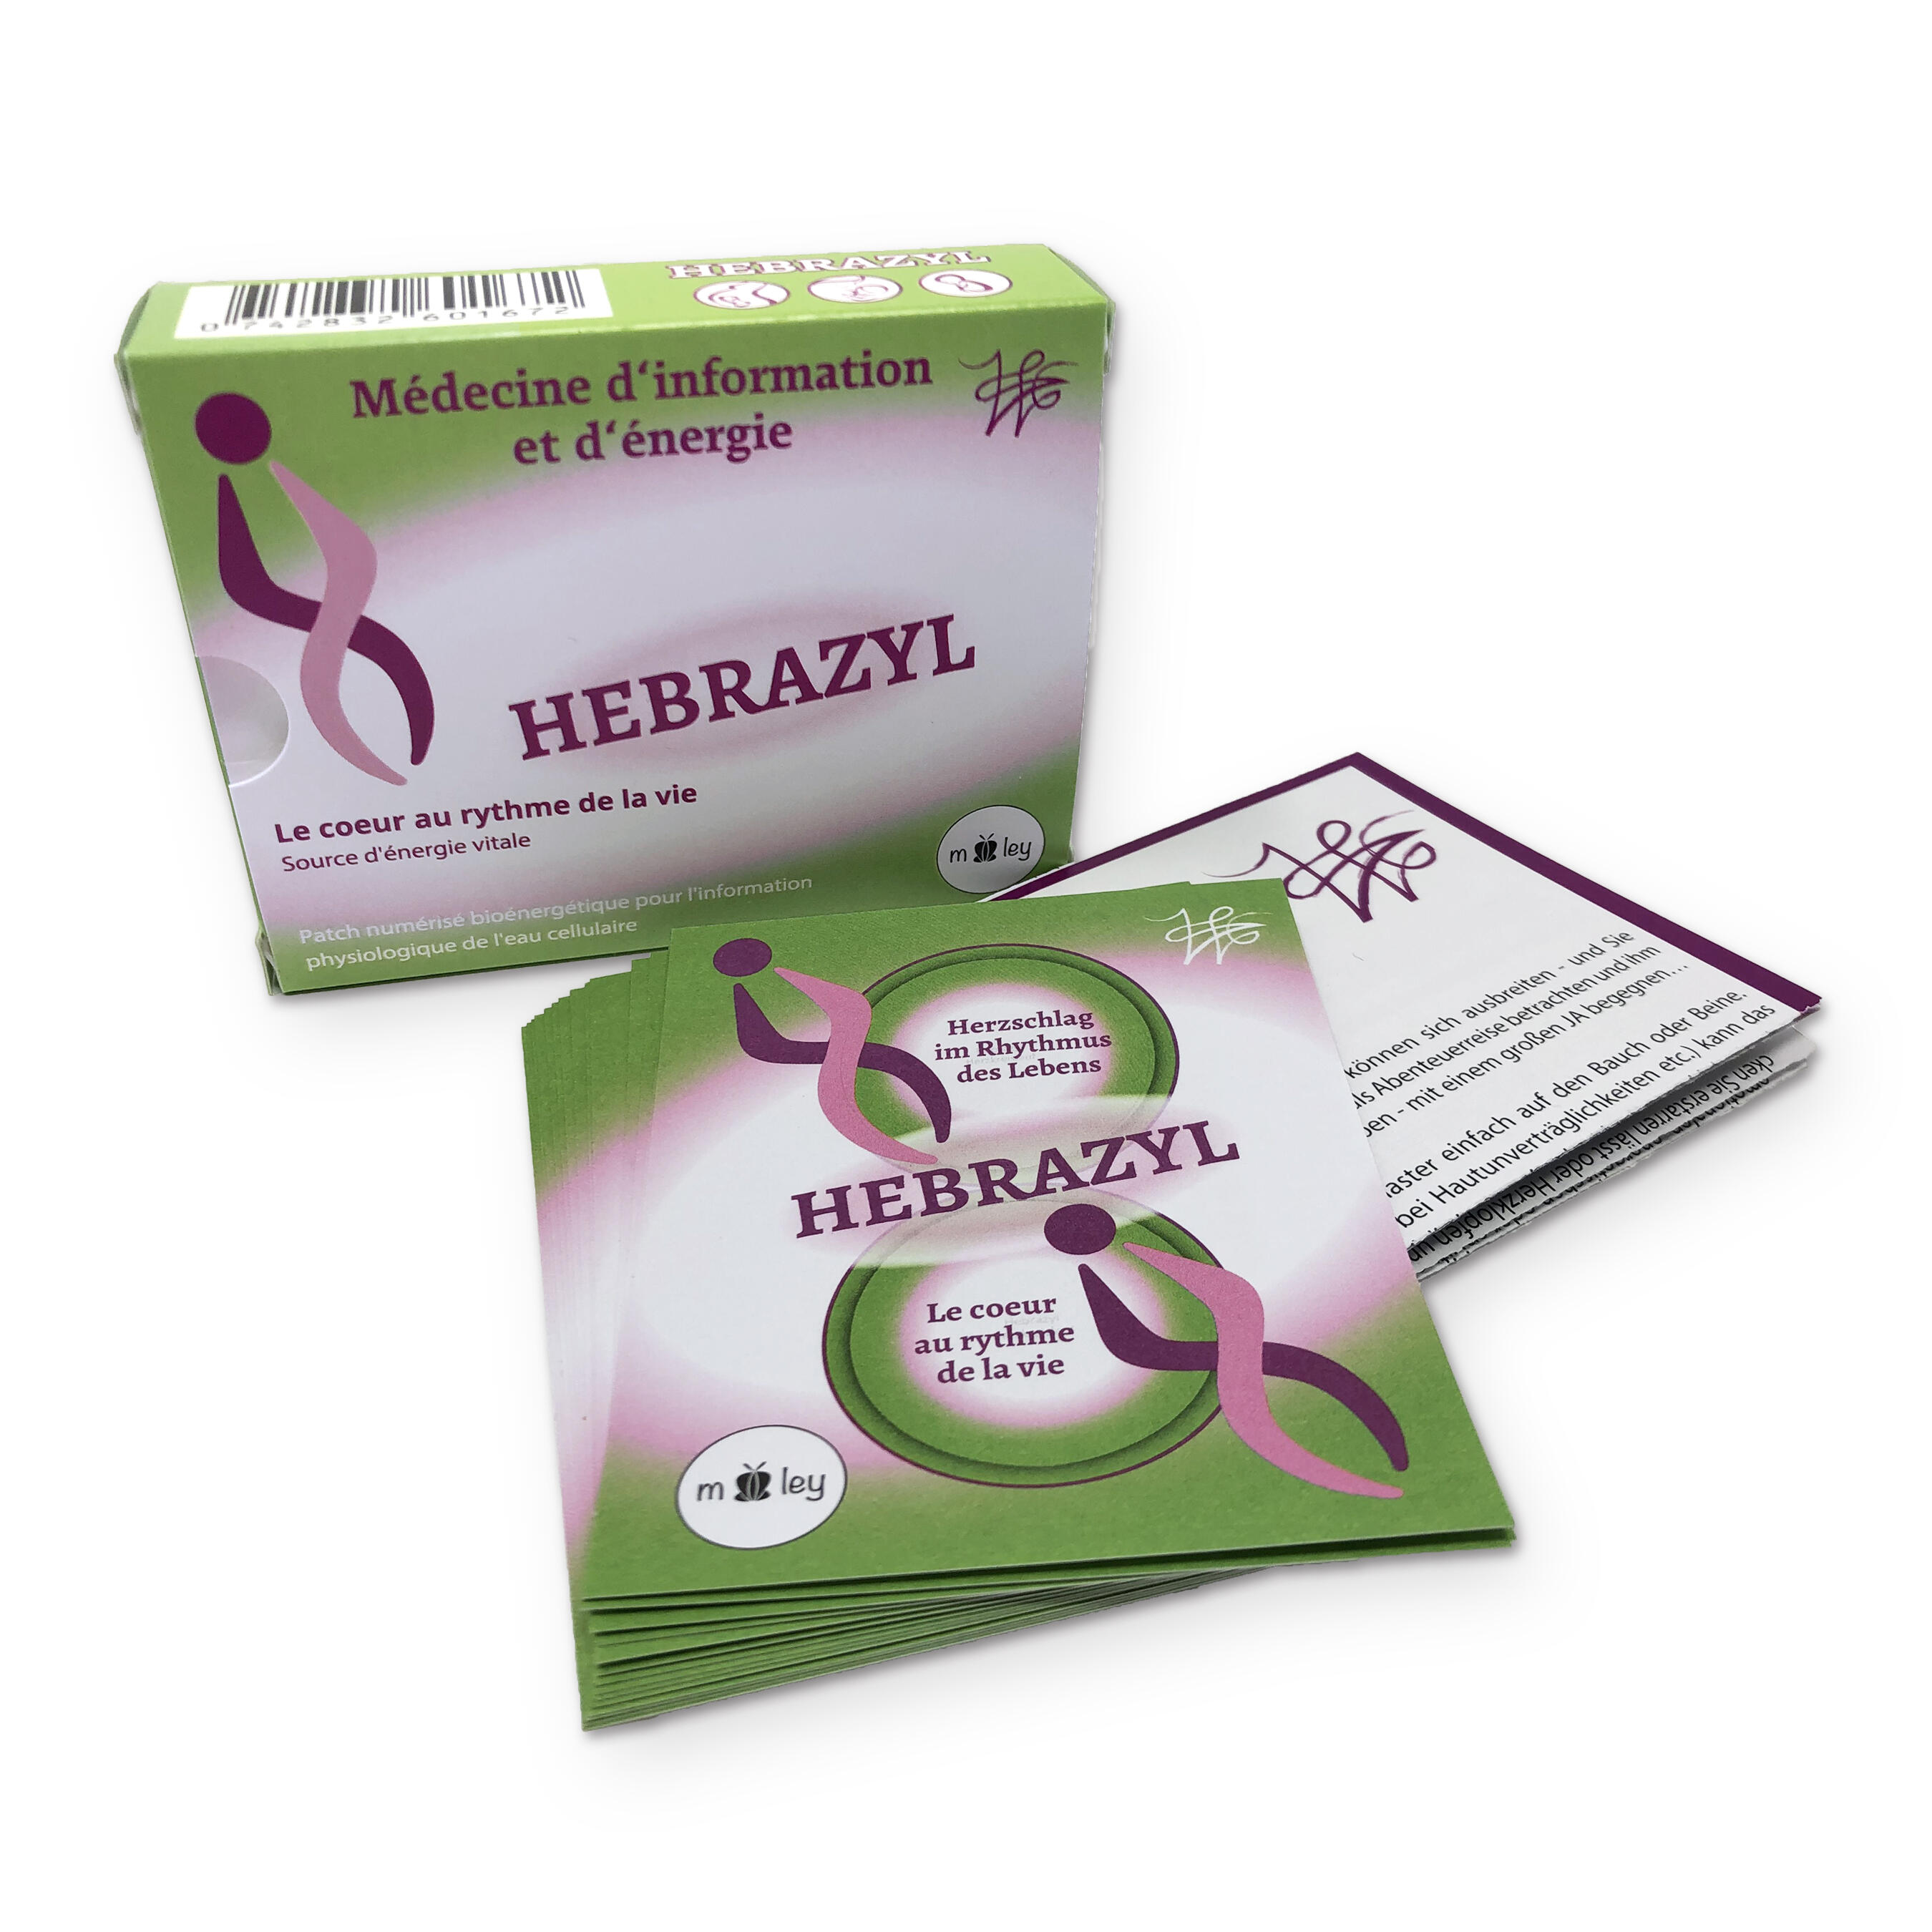 Hebrazyl. - heart - circulation power source of life energy